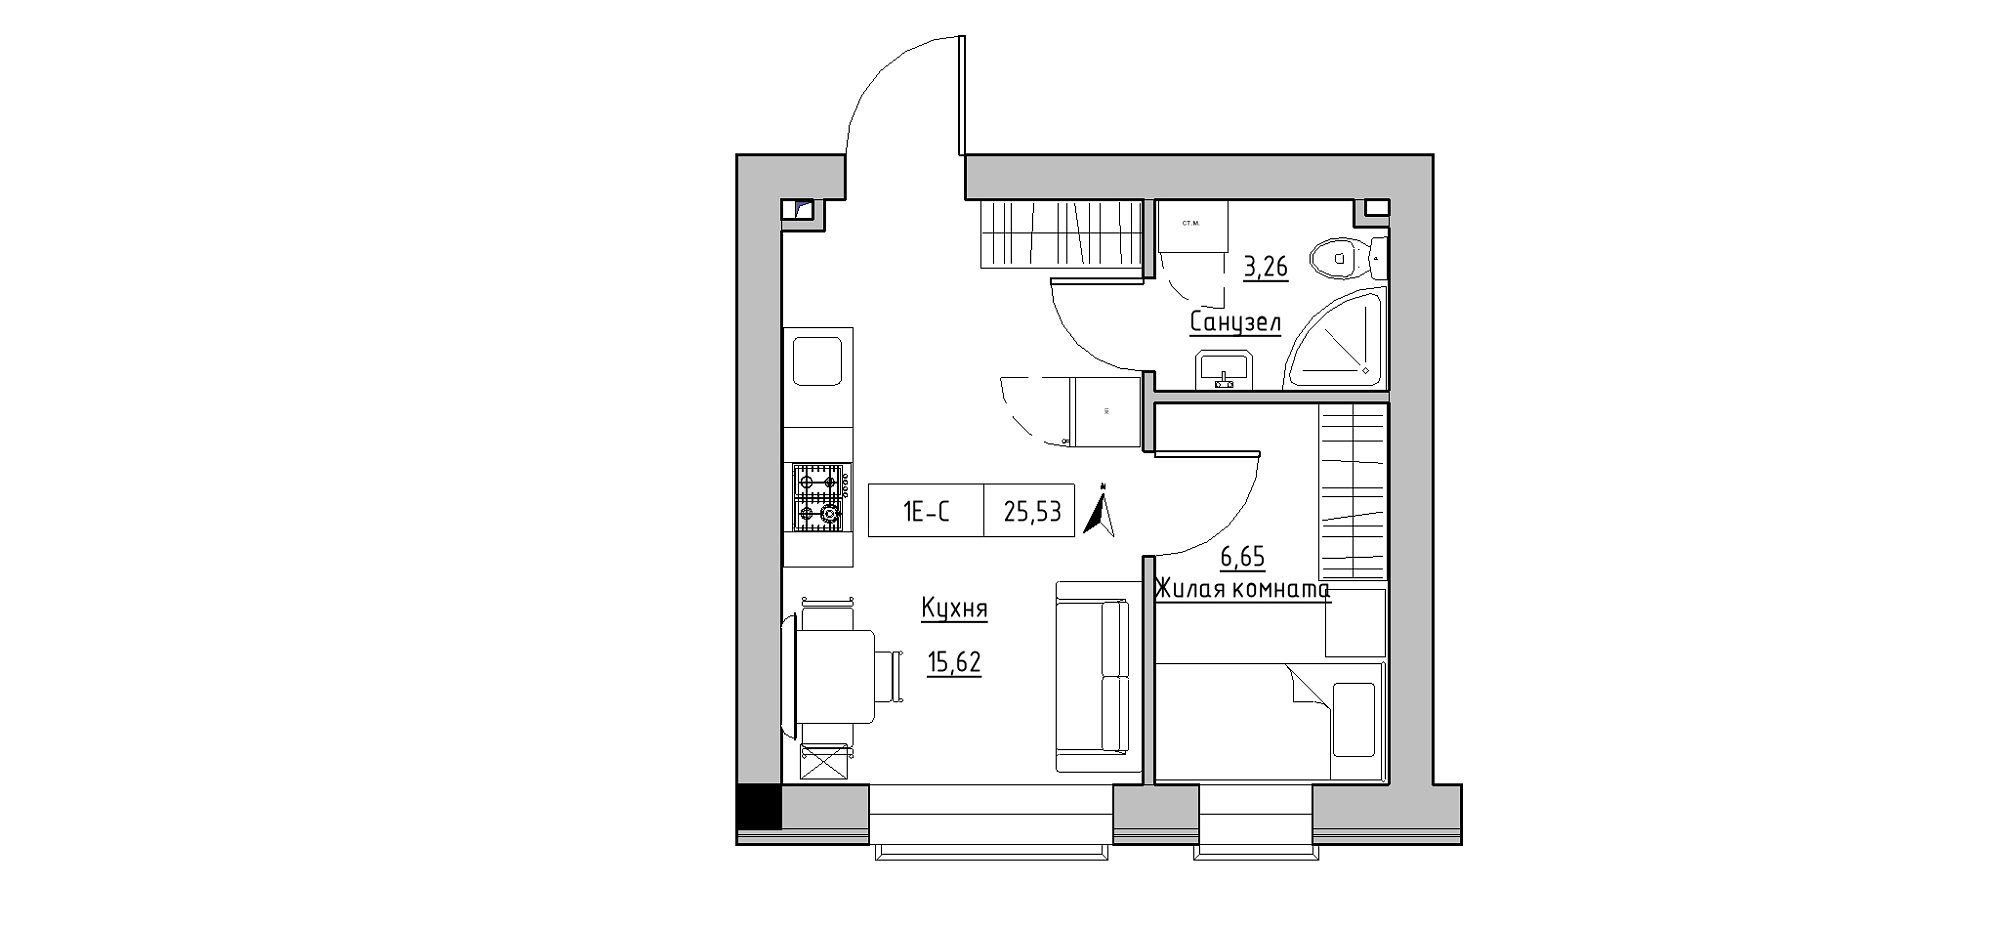 Planning 1-rm flats area 25.53m2, KS-020-03/0004.